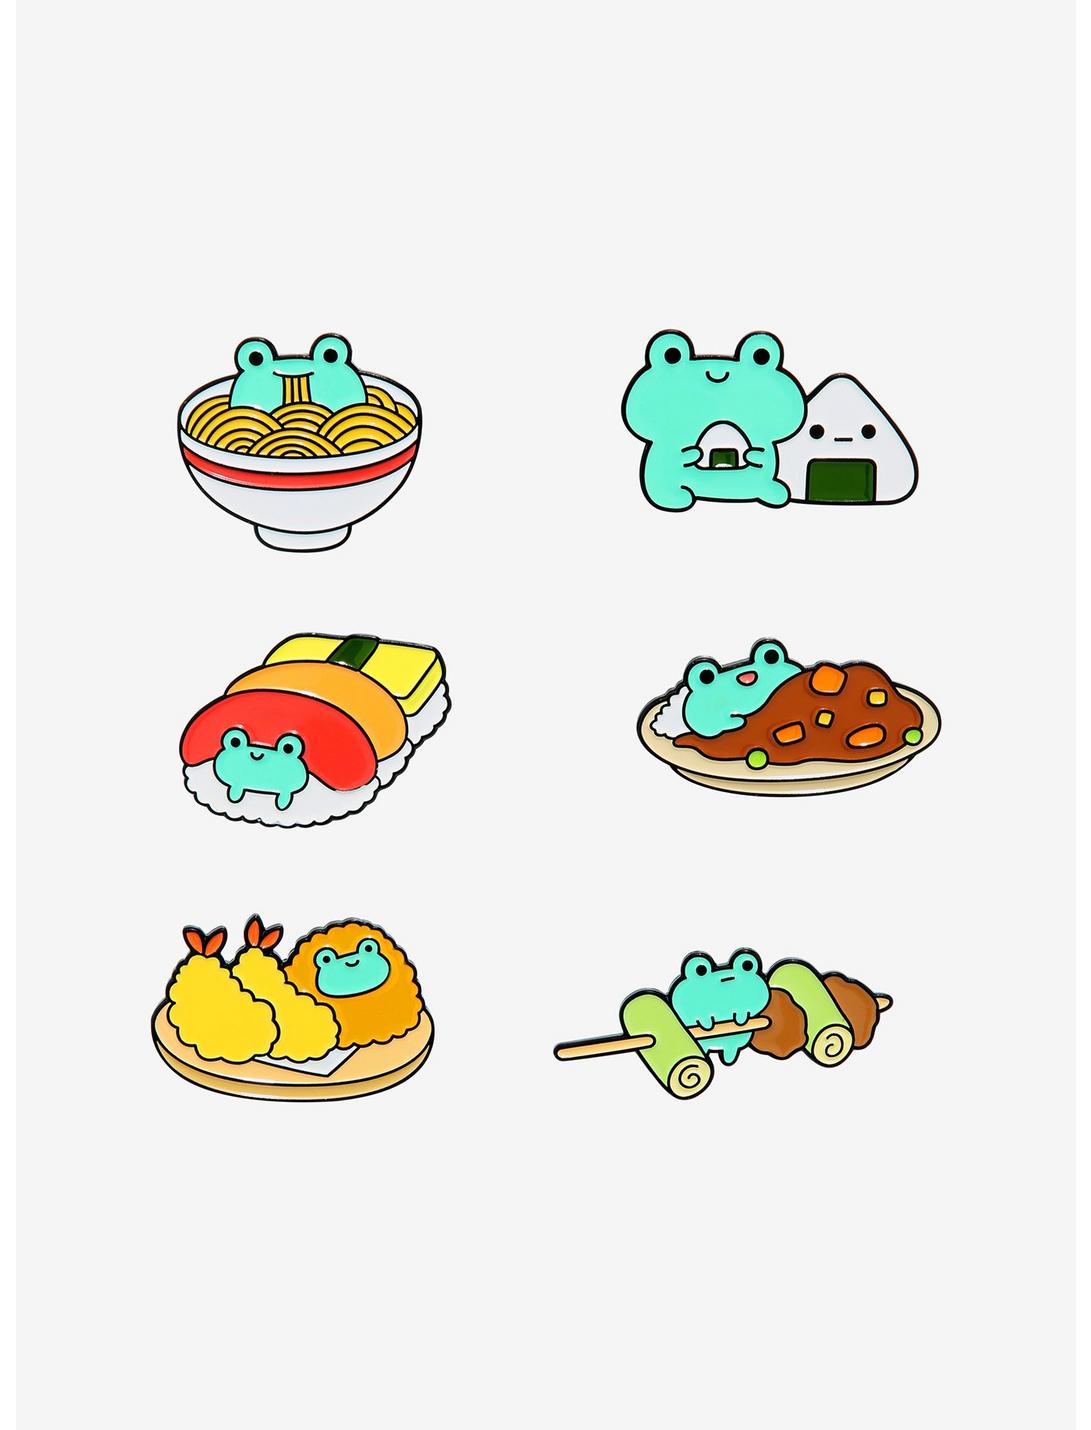 Frog Japanese Food Blind Bag Enamel Pin, , hi-res